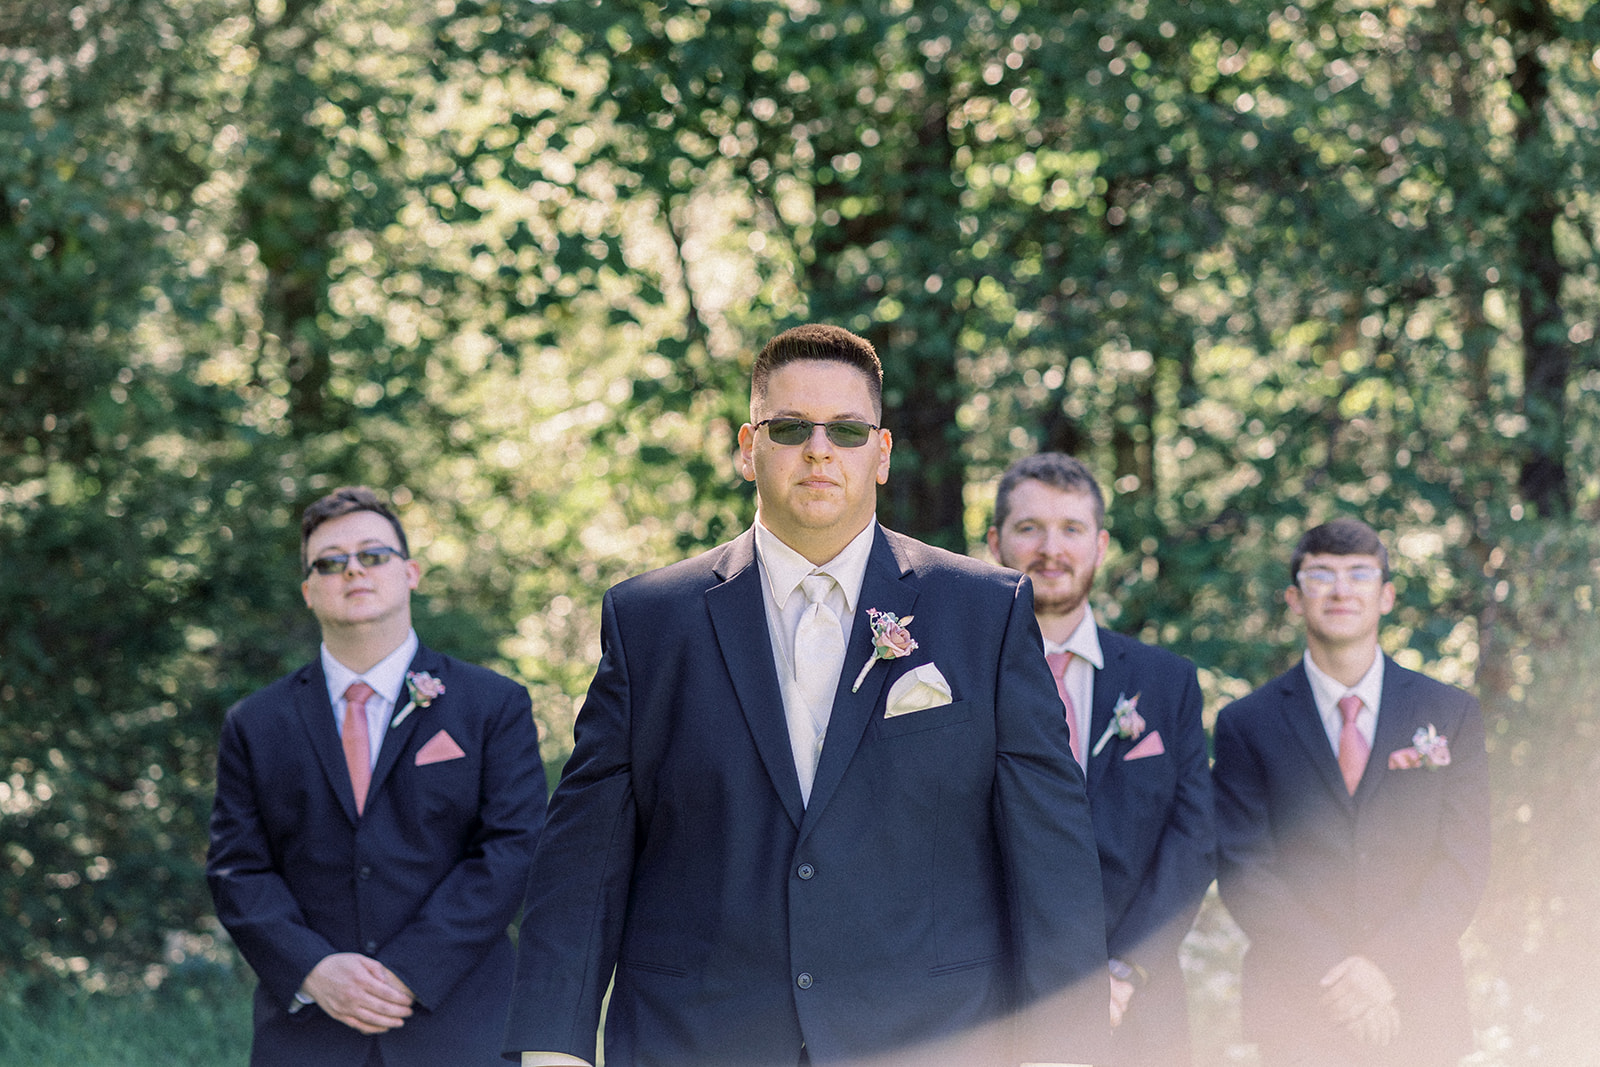 Pennsylvania wedding photographer captures groom walking with groomsmen behind him wearing navy suit